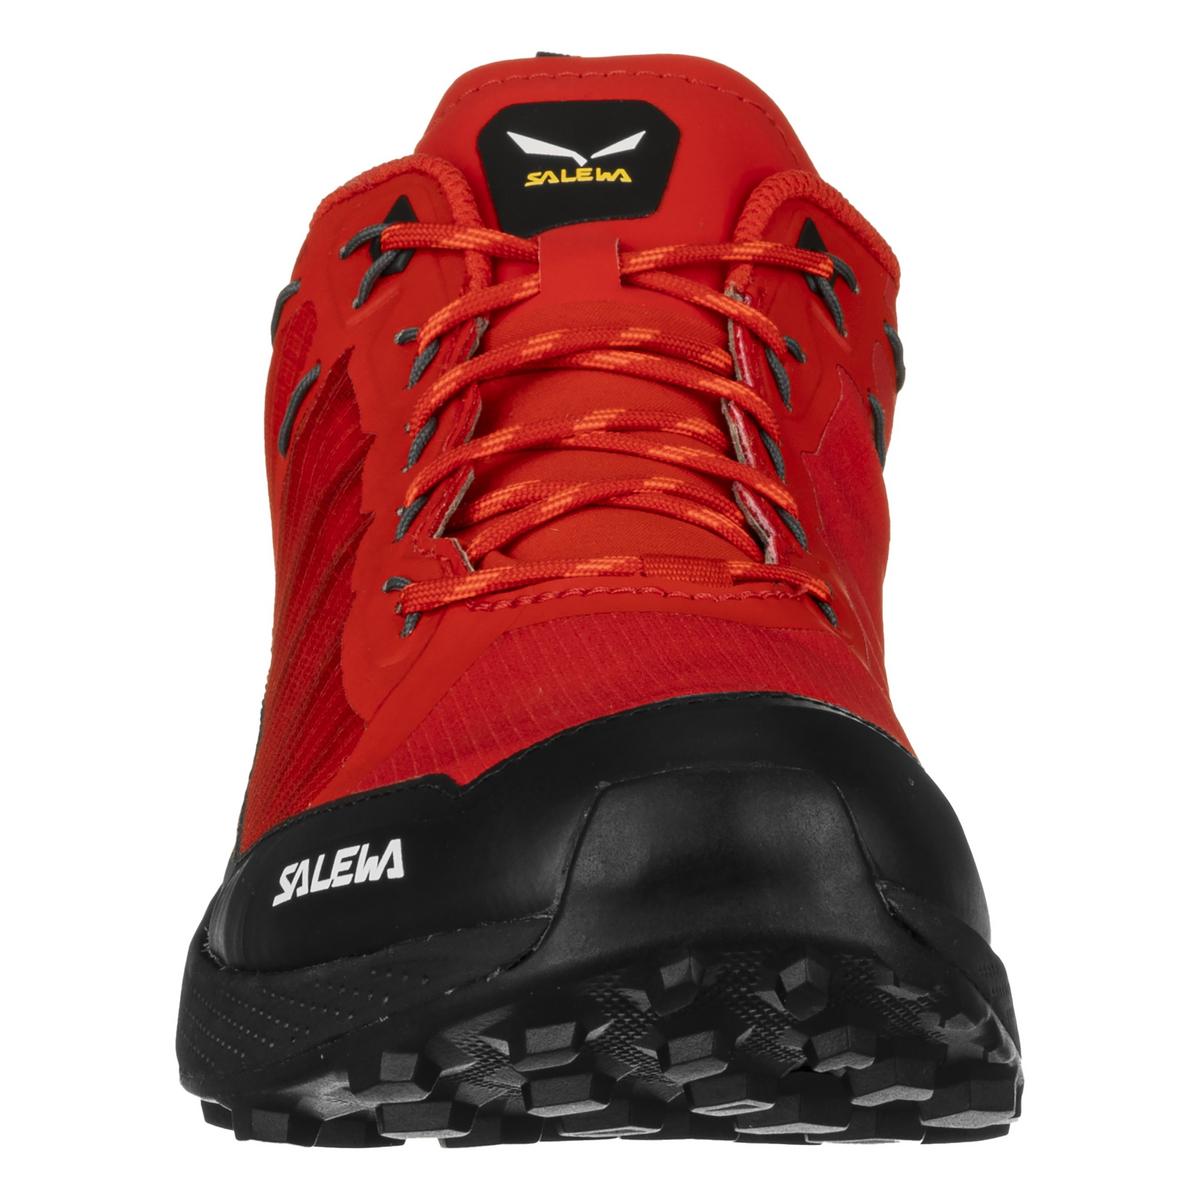 Salewa Women's Pedroc PowerTex Hiking Shoes - Red